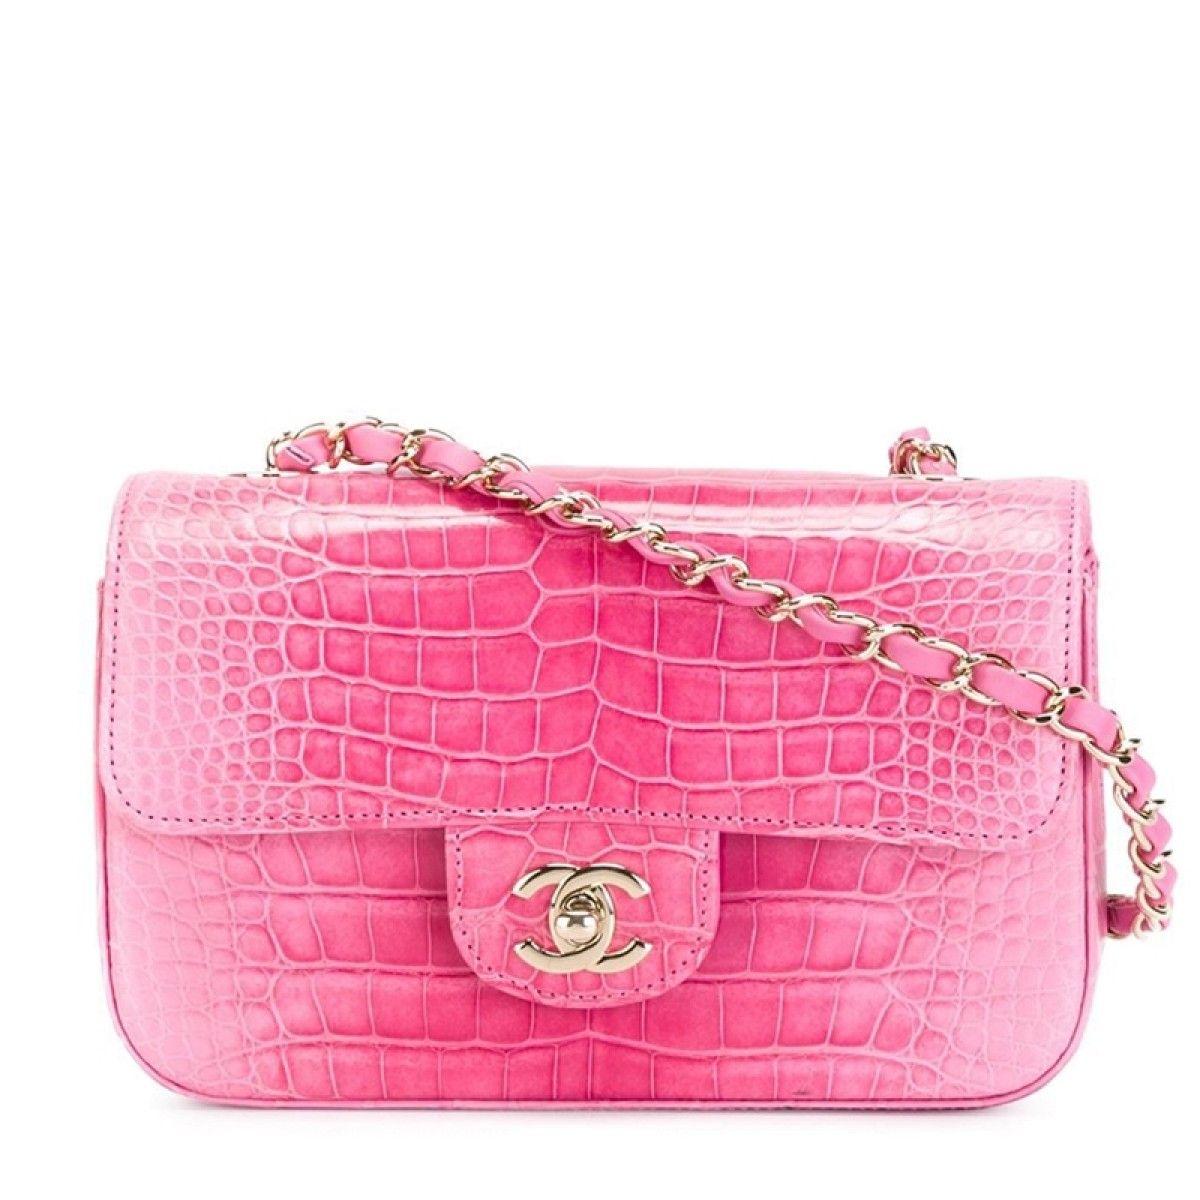 Crocodile with Pink Logo - Chanel Pink Crocodile Classic Flap Bag SOLD - Rewind Vintage